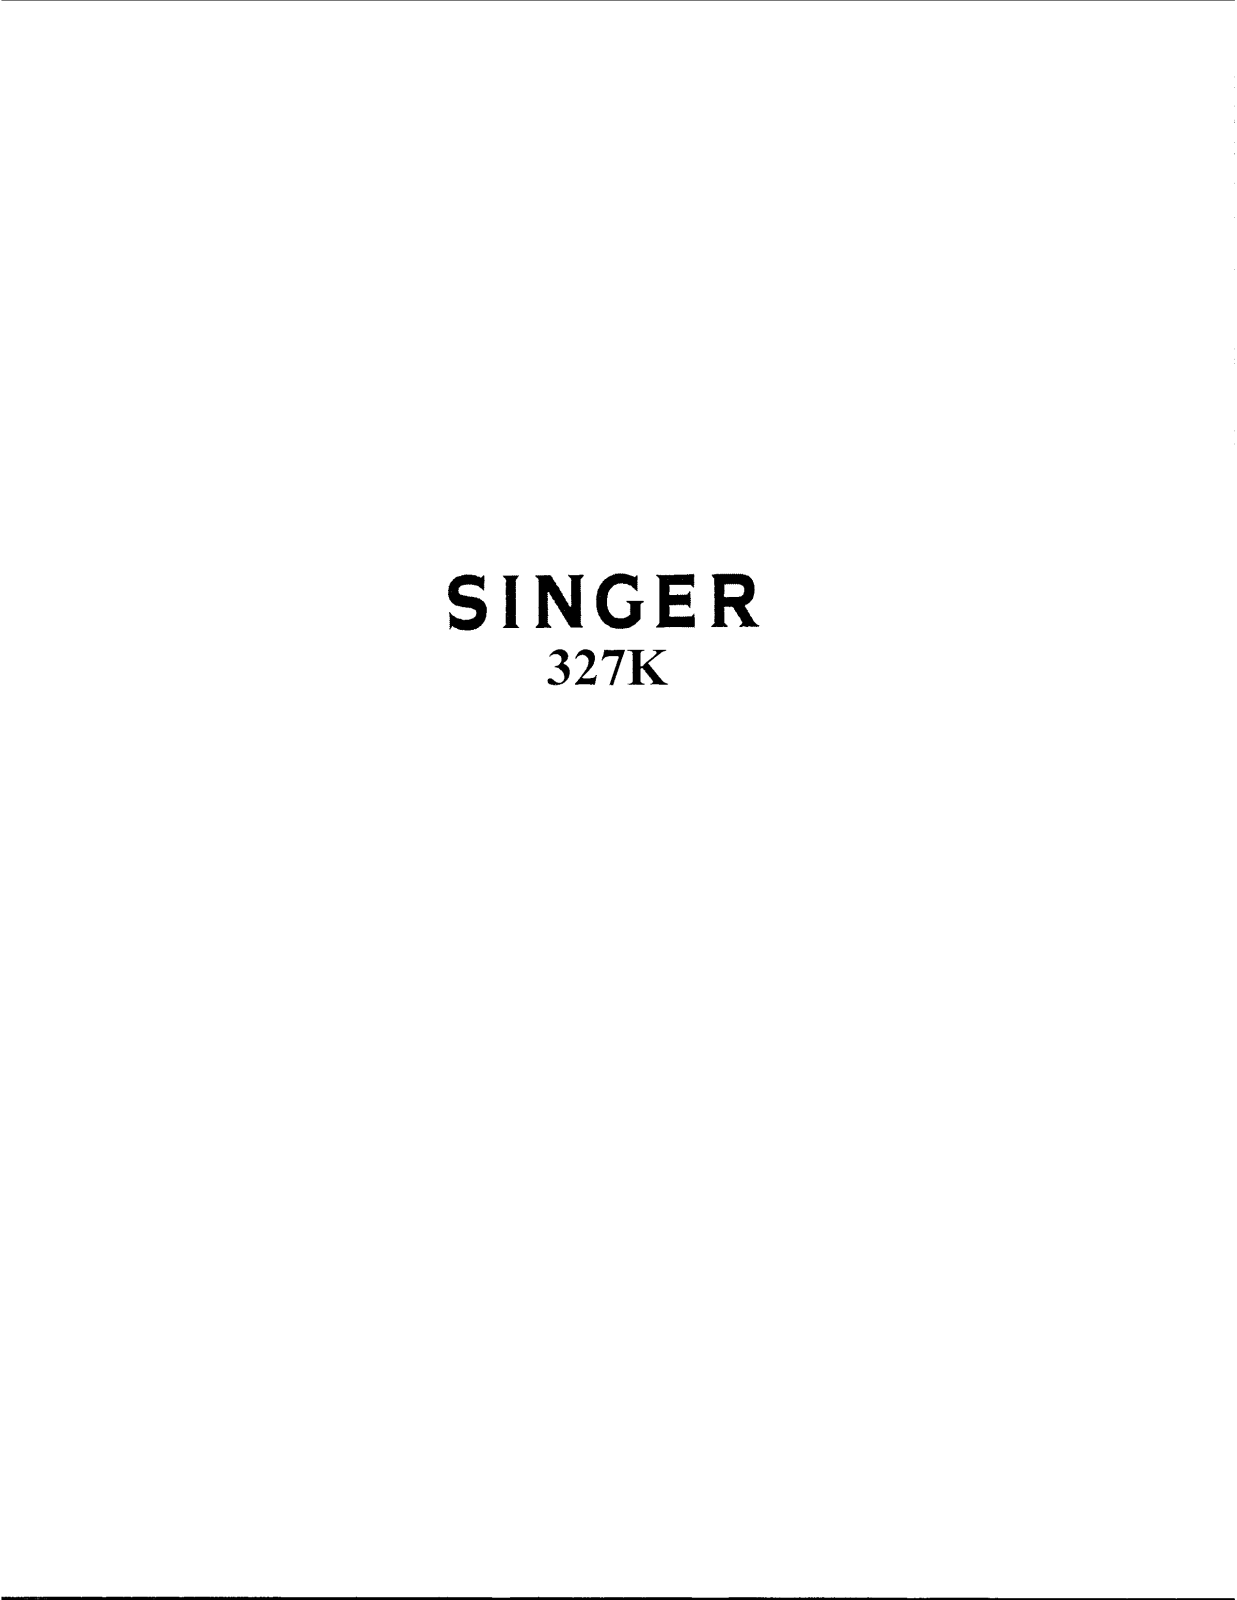 Singer 327K User Manual